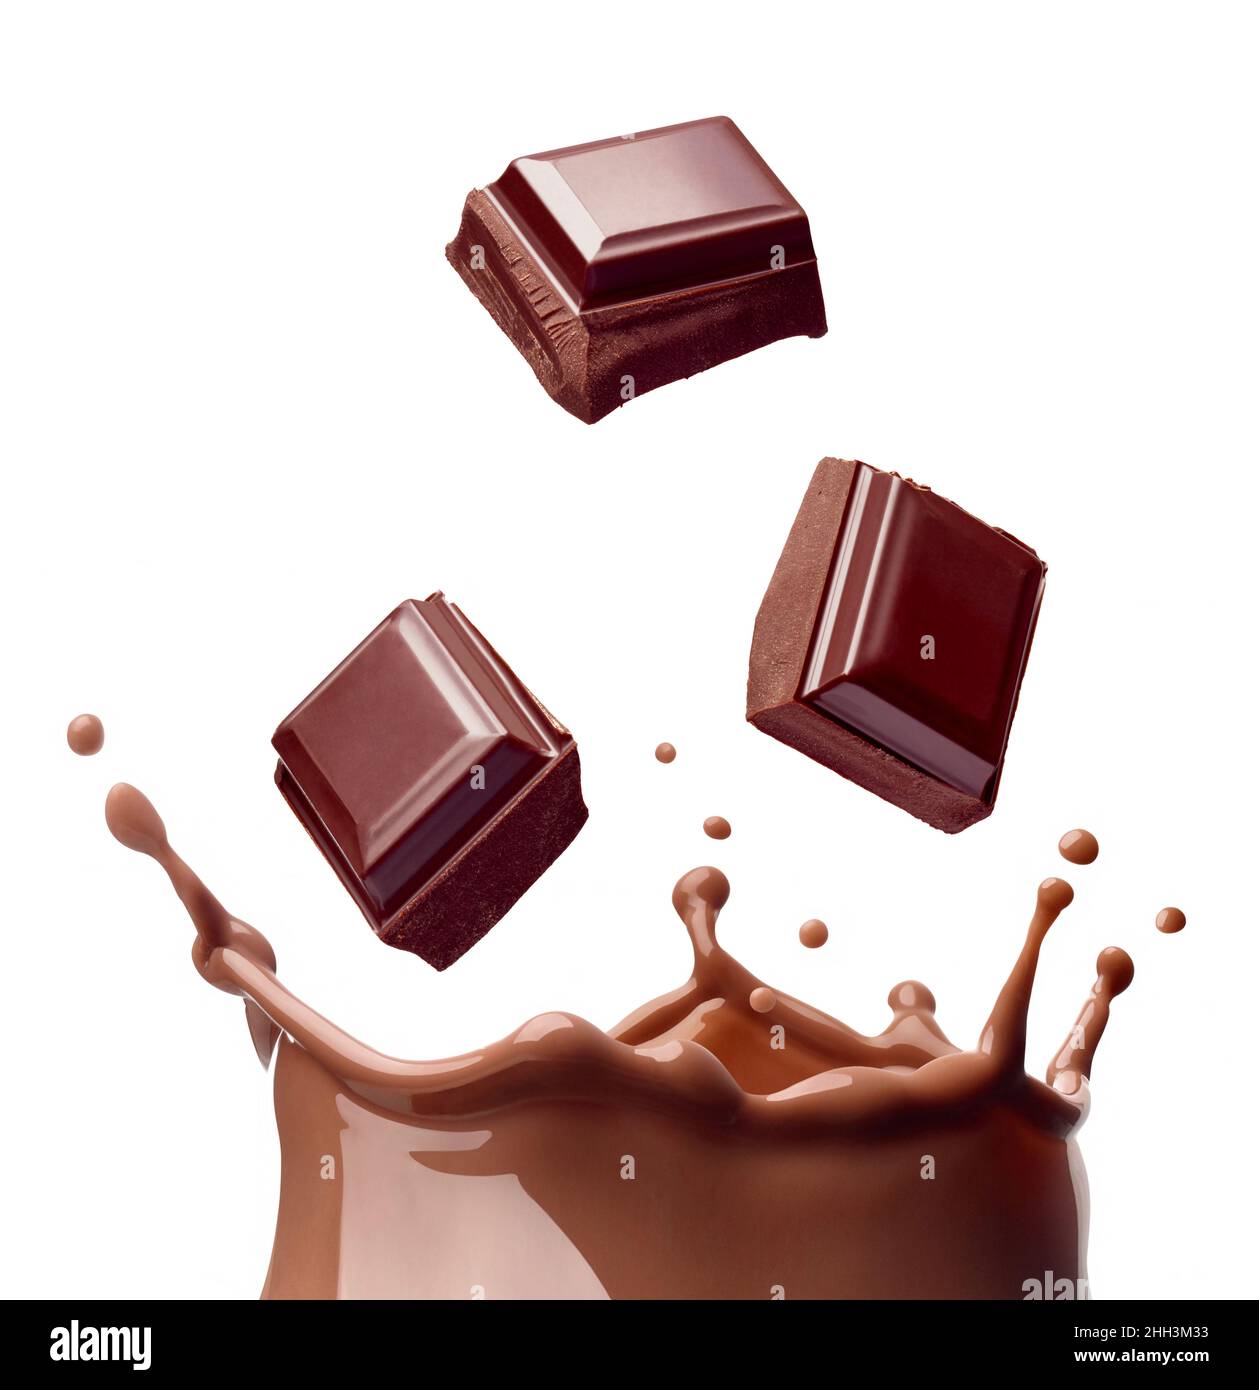 copa de chocolate con leche Foto de stock